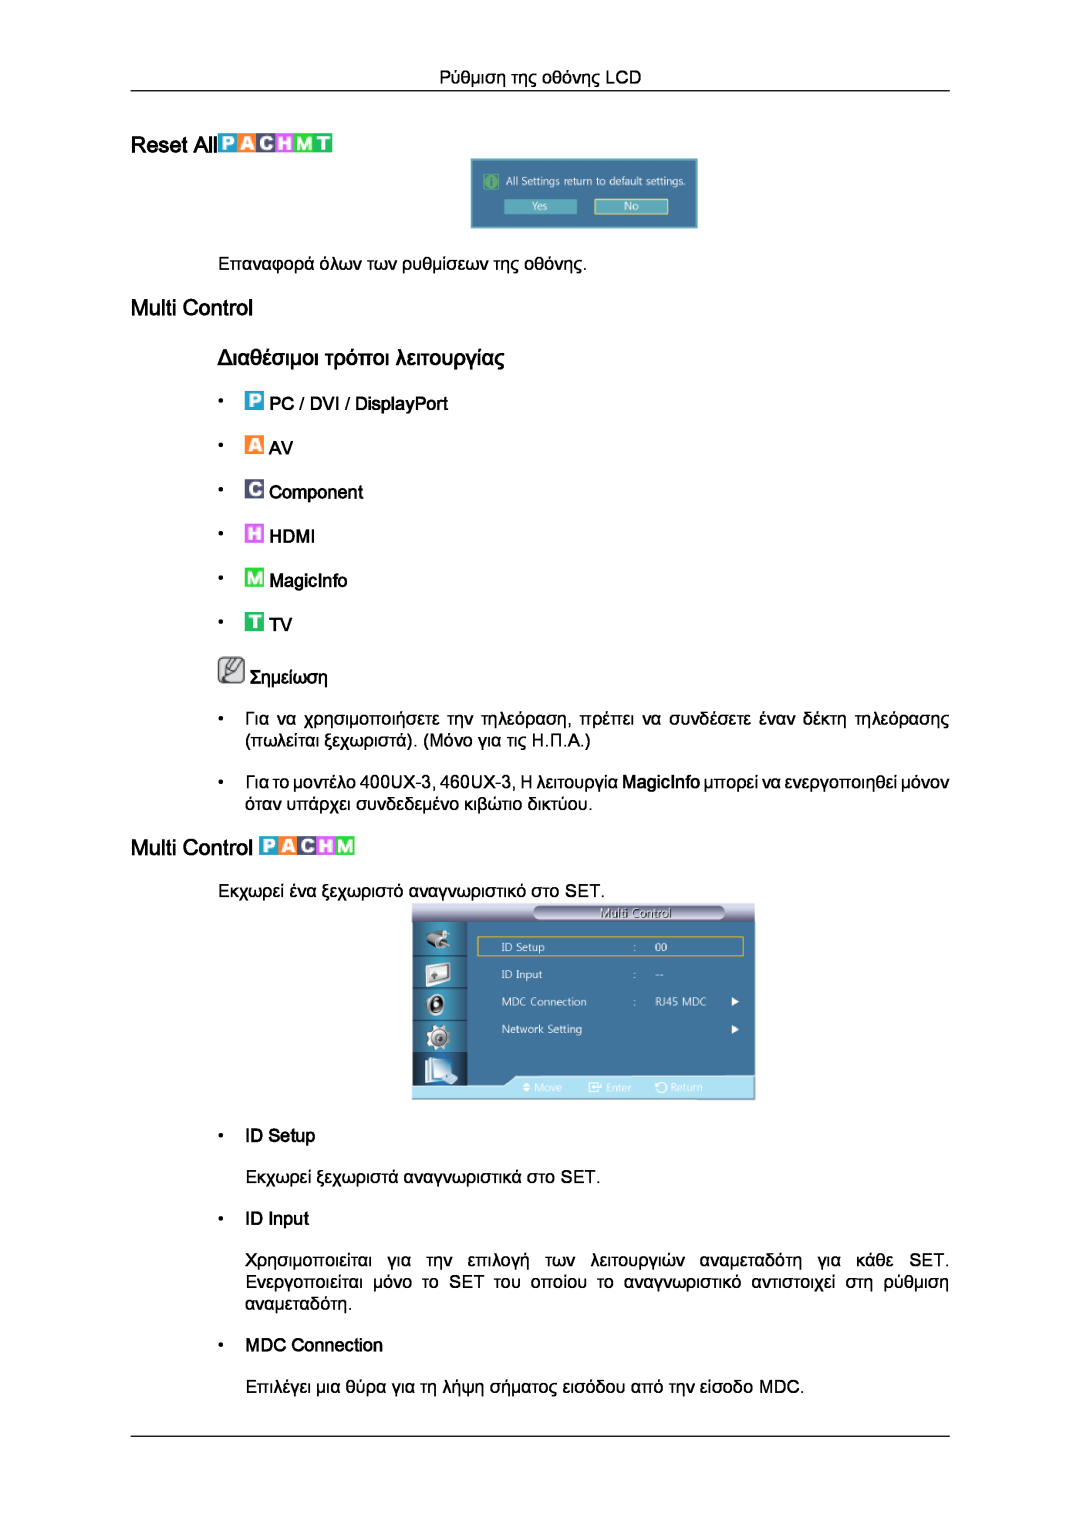 Samsung LH46GWSLBC/EN manual Reset All, Multi Control Διαθέσιμοι τρόποι λειτουργίας, ID Setup, ID Input, MDC Connection 